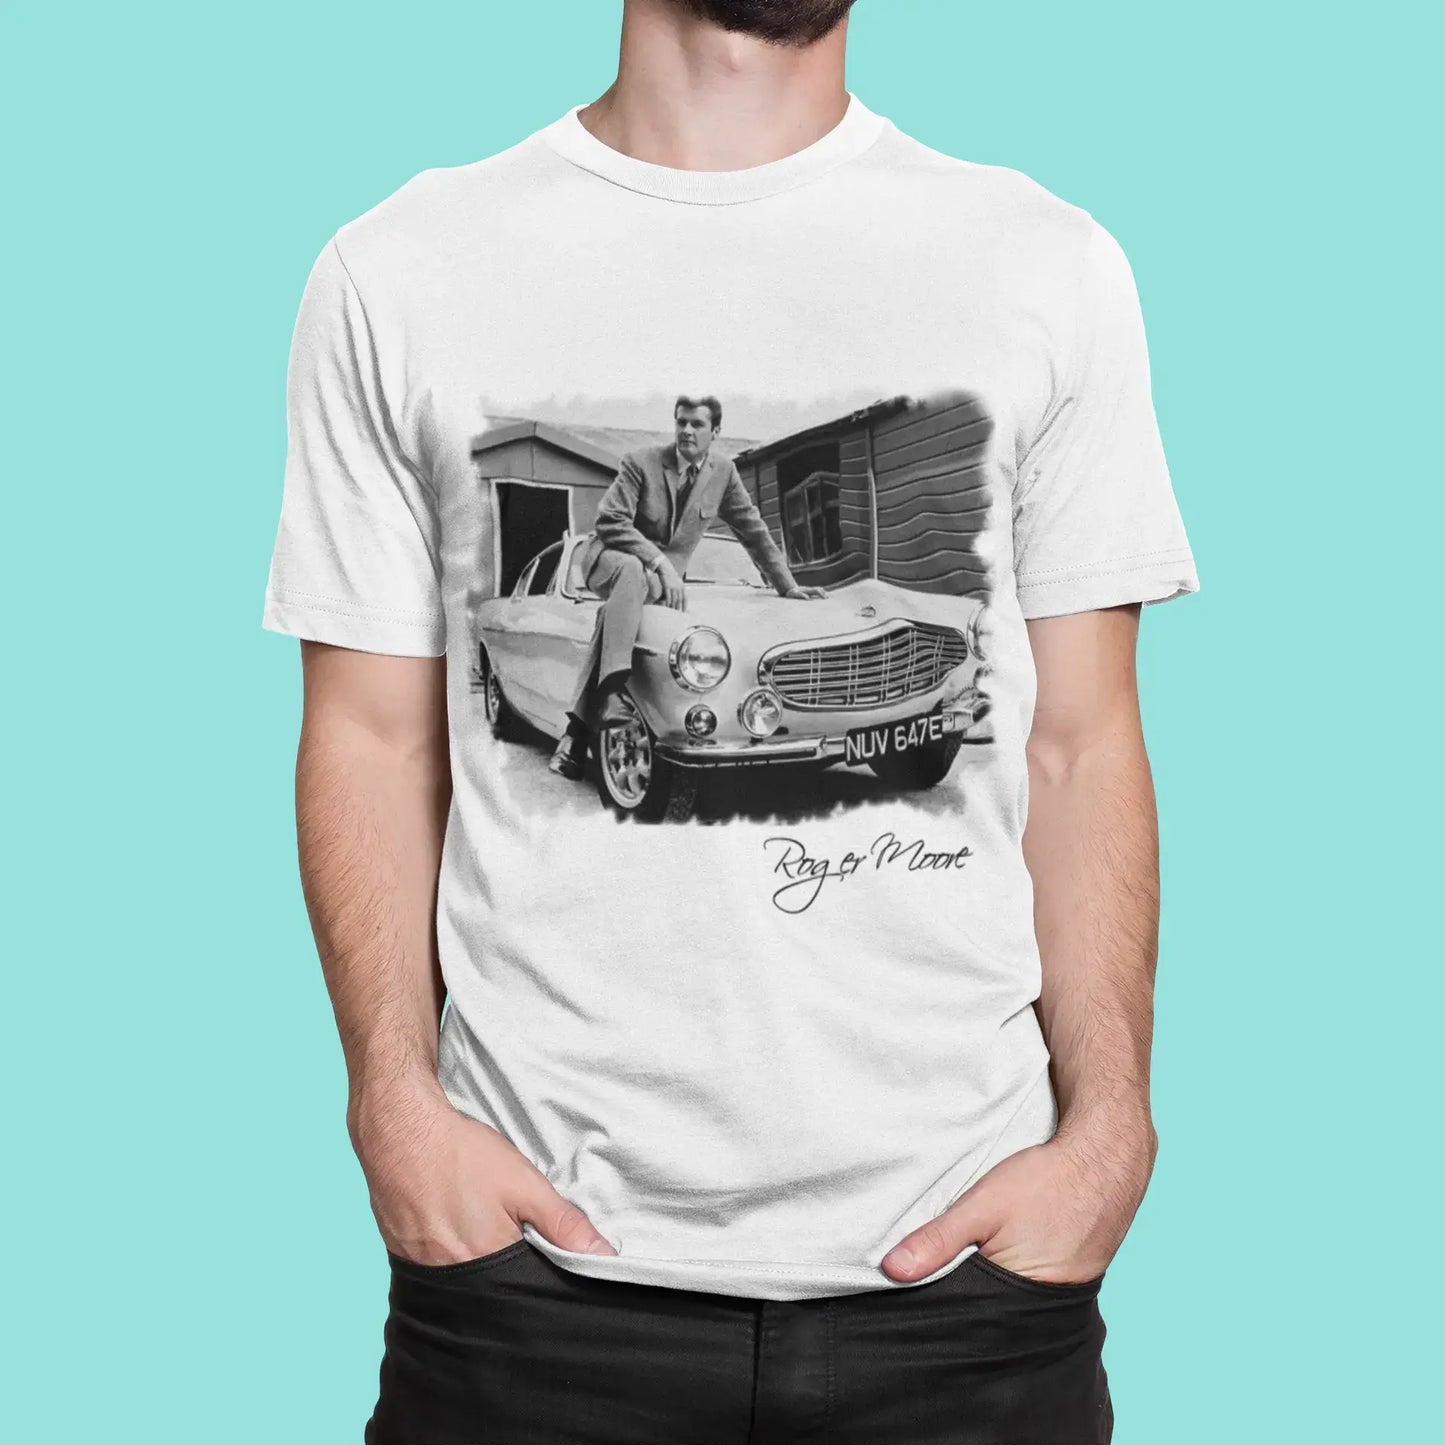 Roger Moore Car, t Shirt Homme, Roger Moore, Cadeau Homme